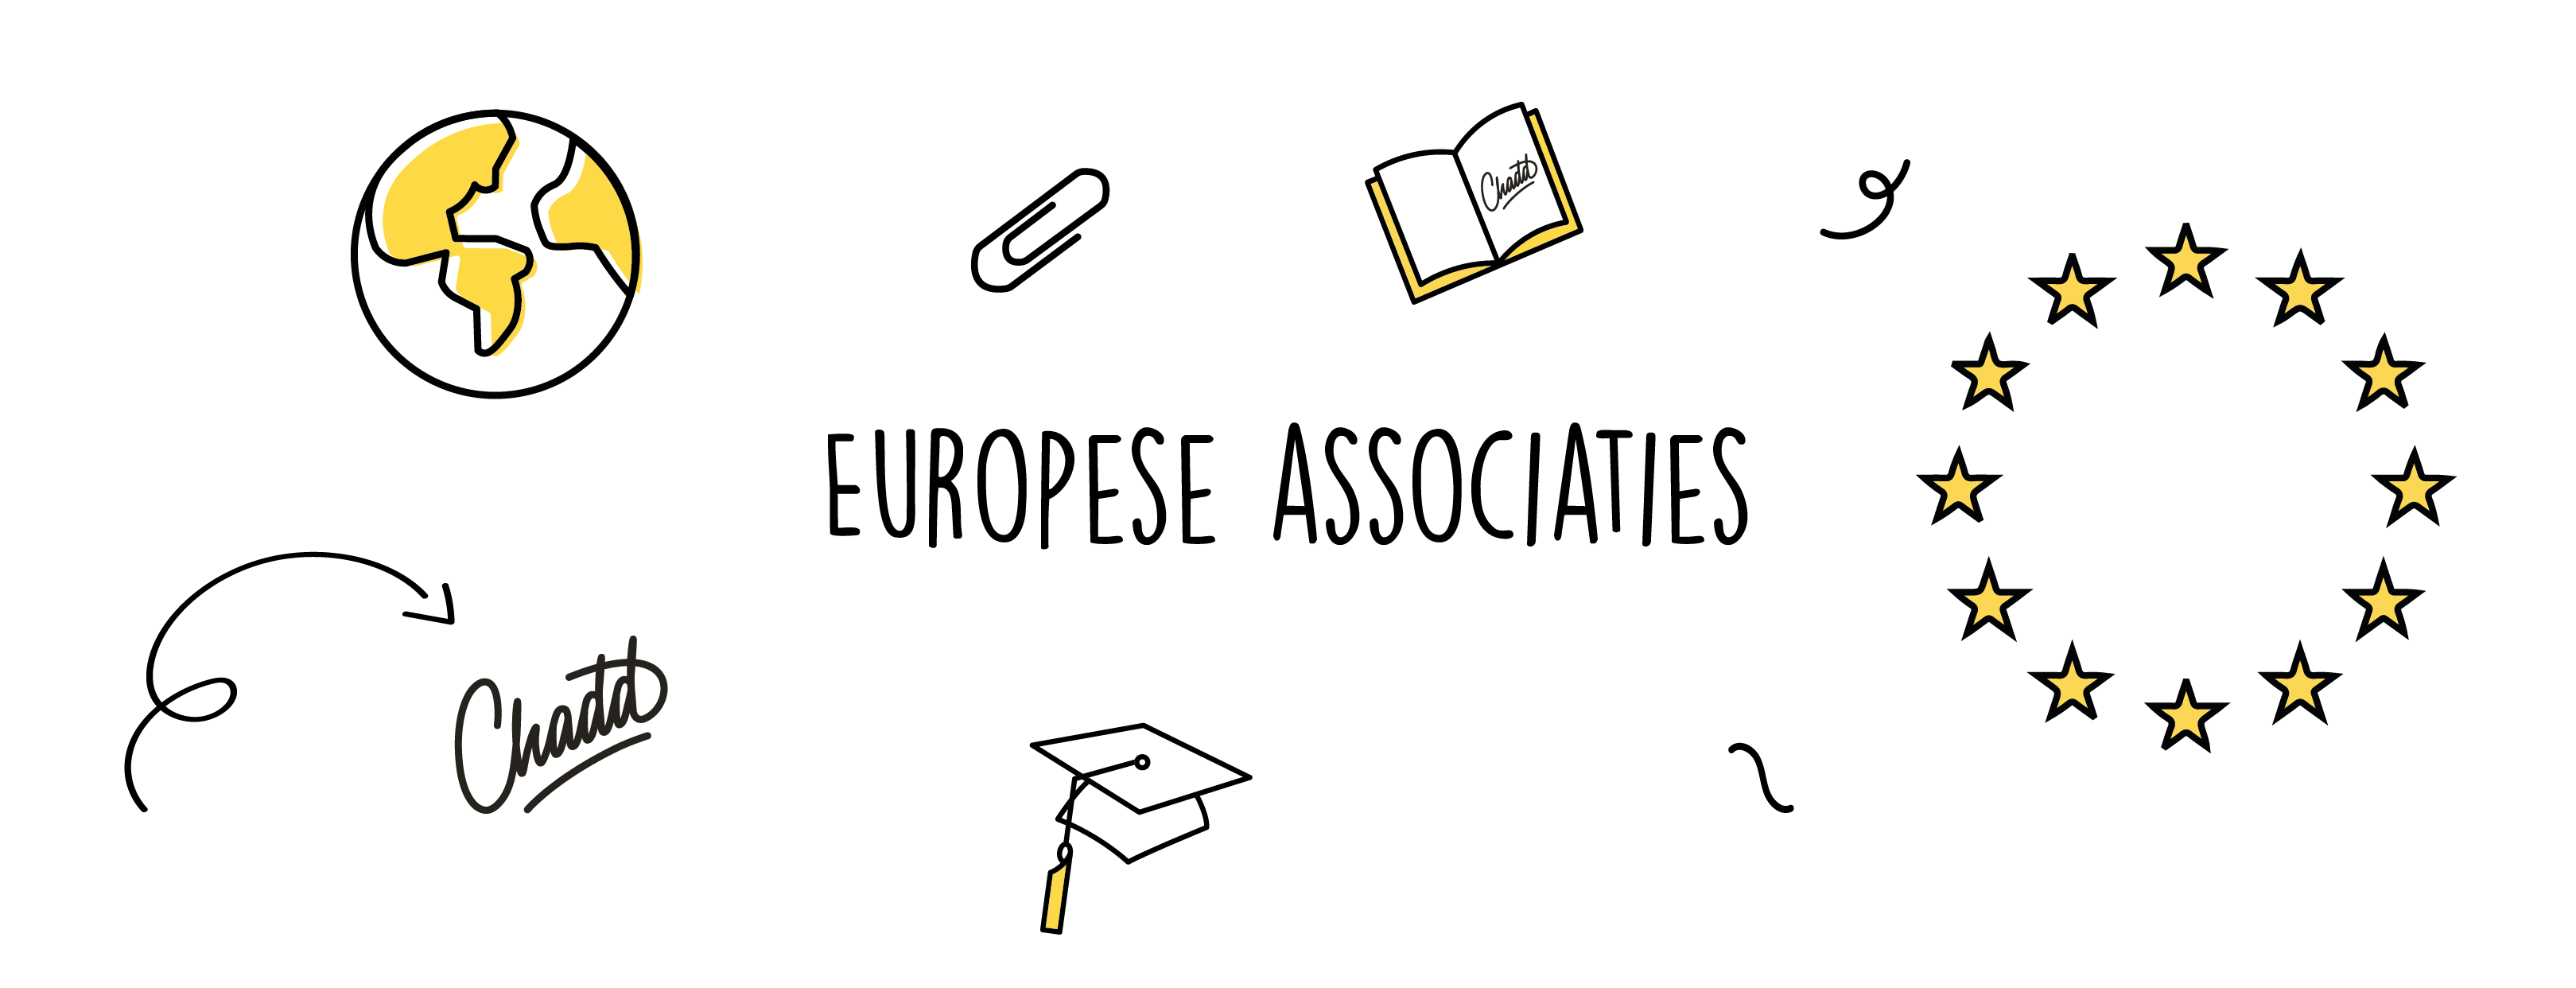 Europese associaties